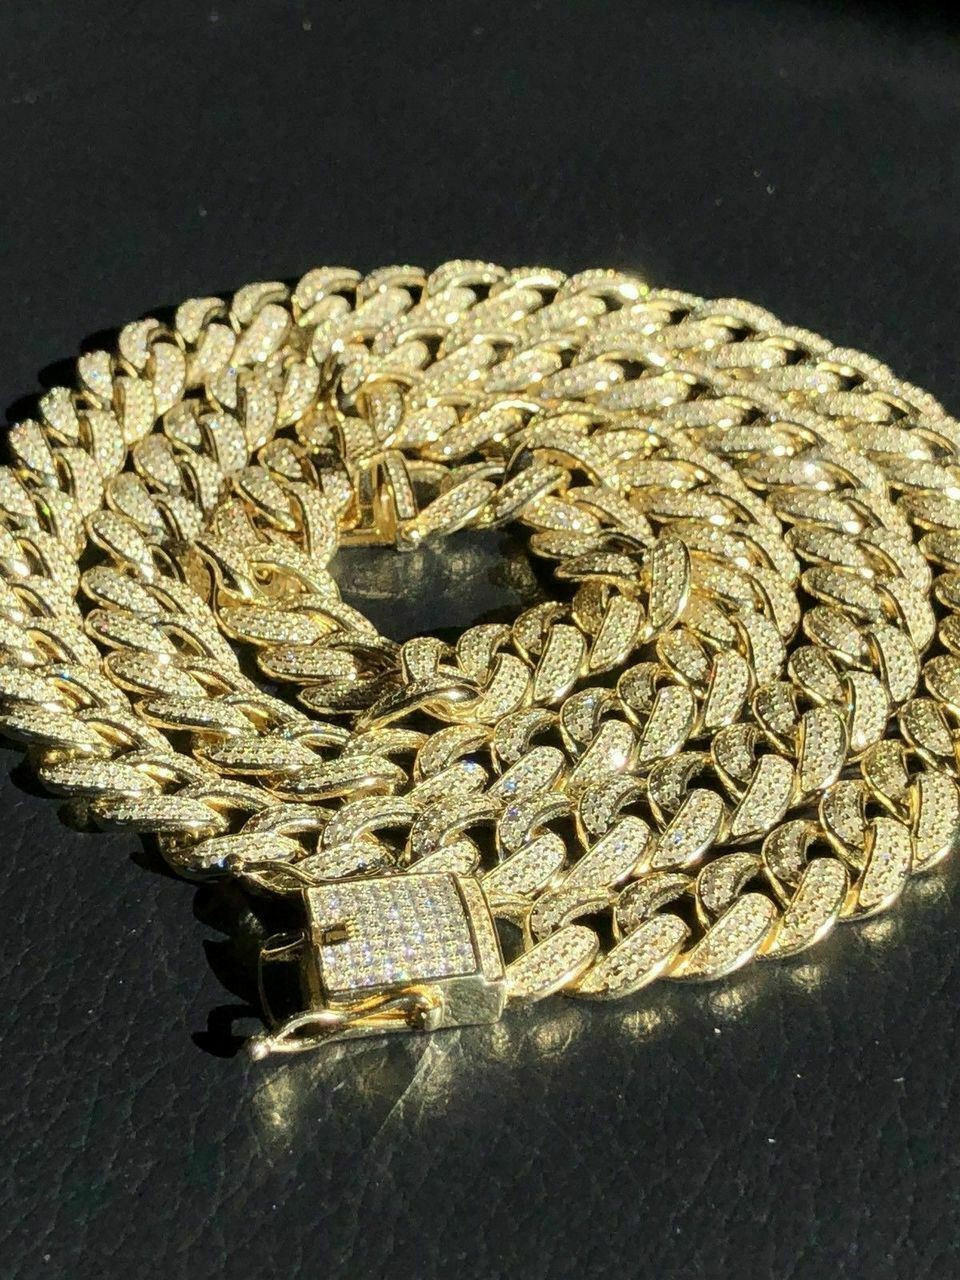 Men's Wide Cuban Link Bracelet in 18K Gold-Plated Sterling Silver - Gold Over Silver